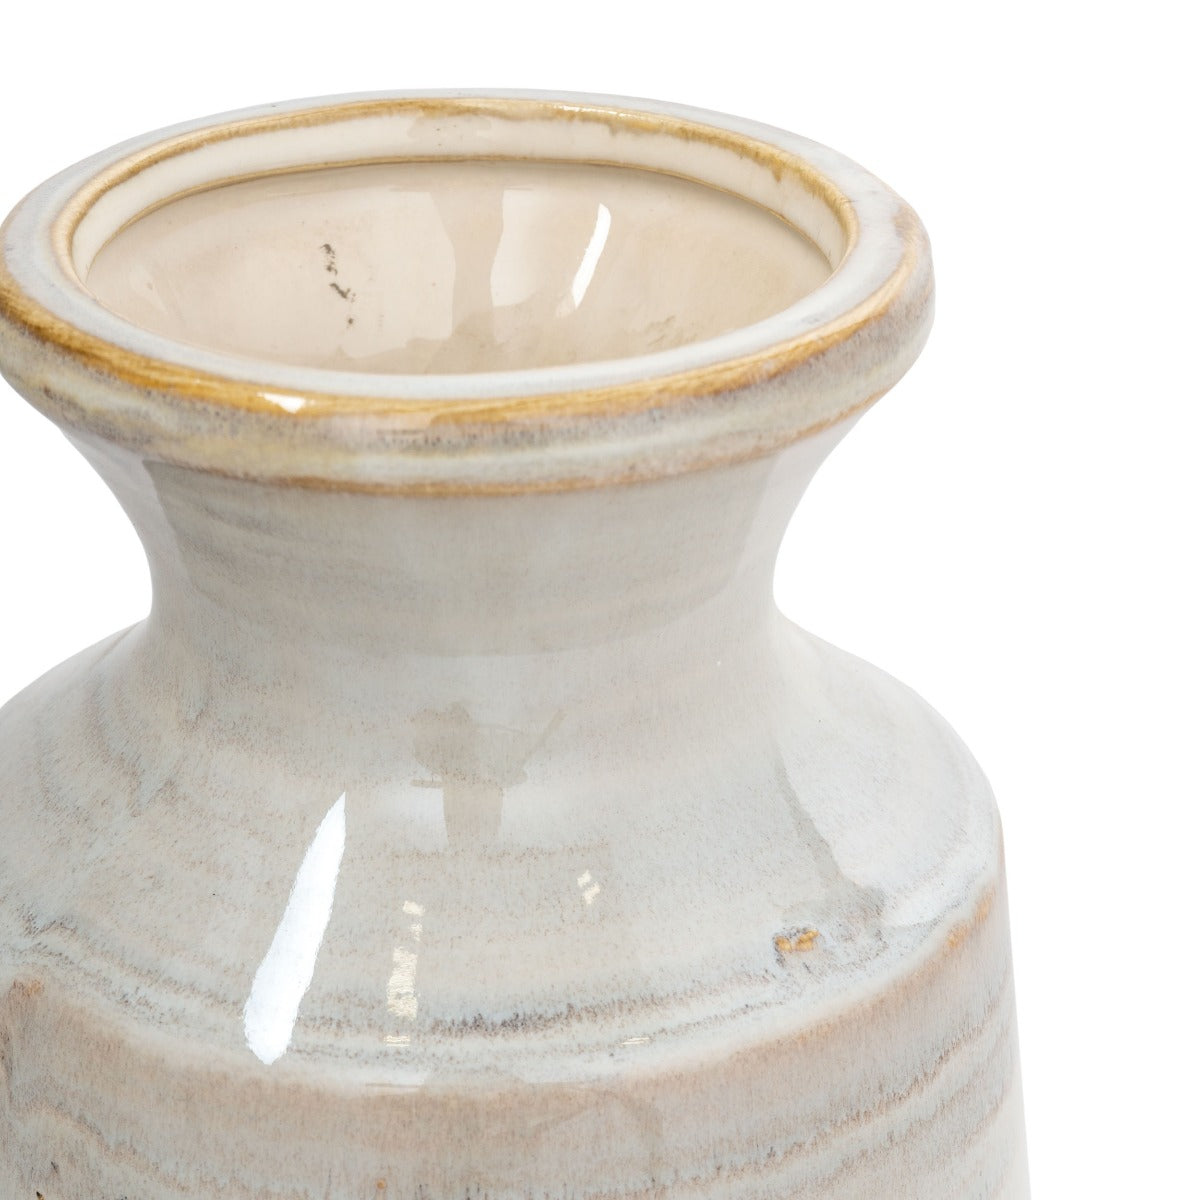 Coastal inspired ceramic table vases SMALL (1 PC)